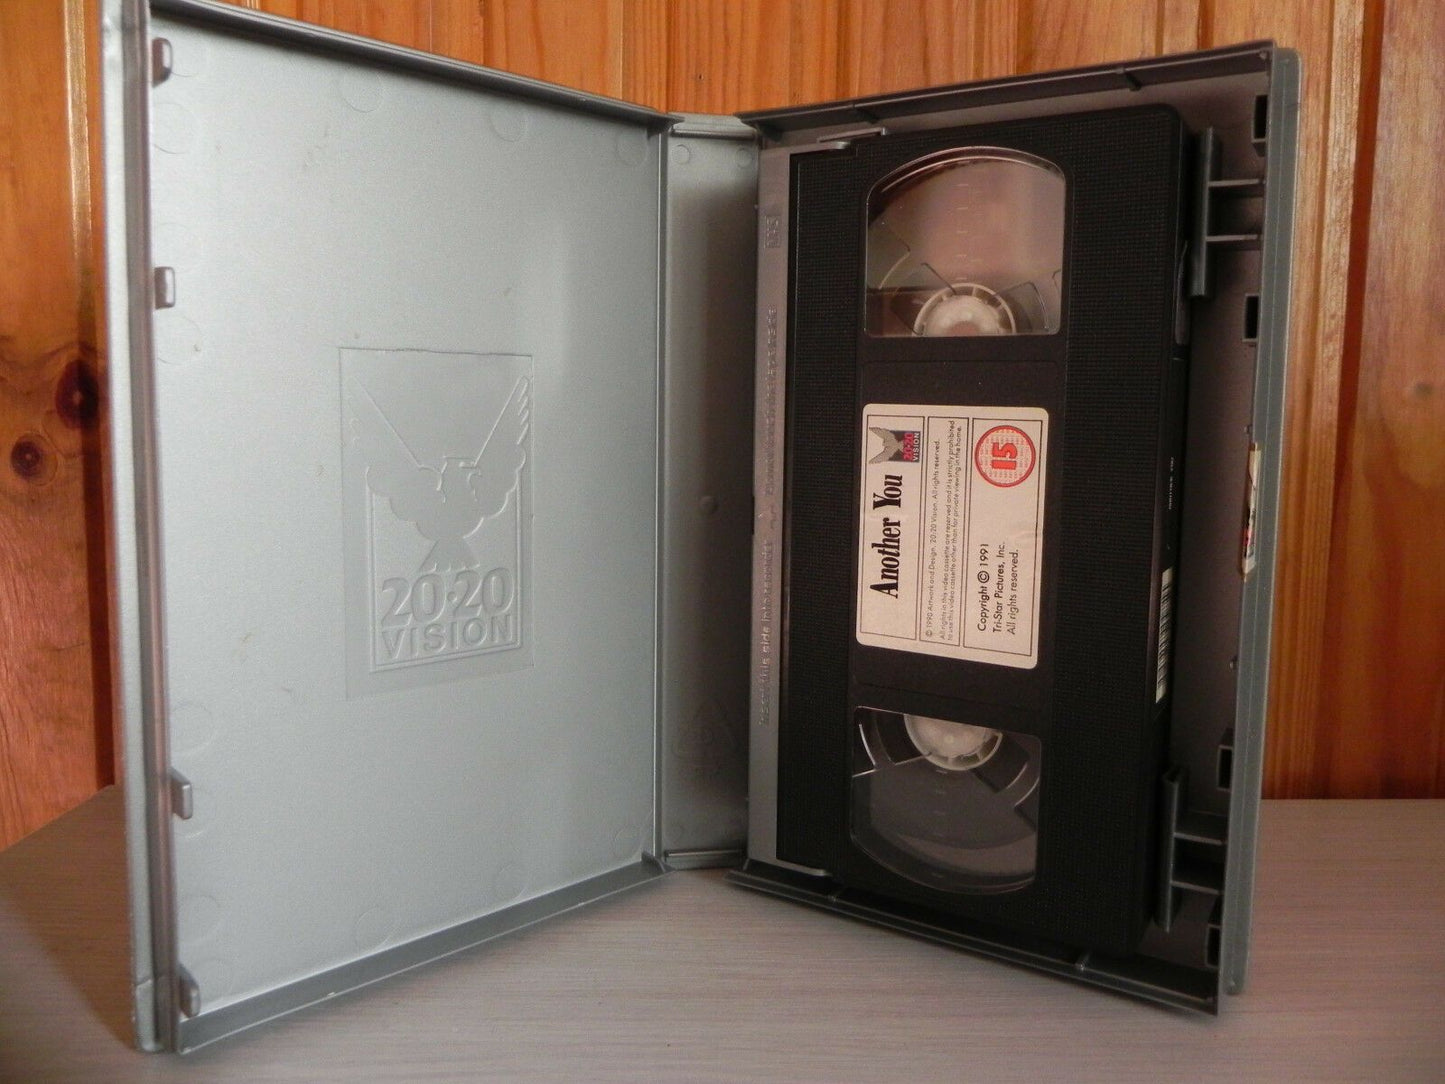 ANOTHER YOU - Big Box - 20/20 - Richard Prior - Gene Wilder - Super Comedy - VHS-